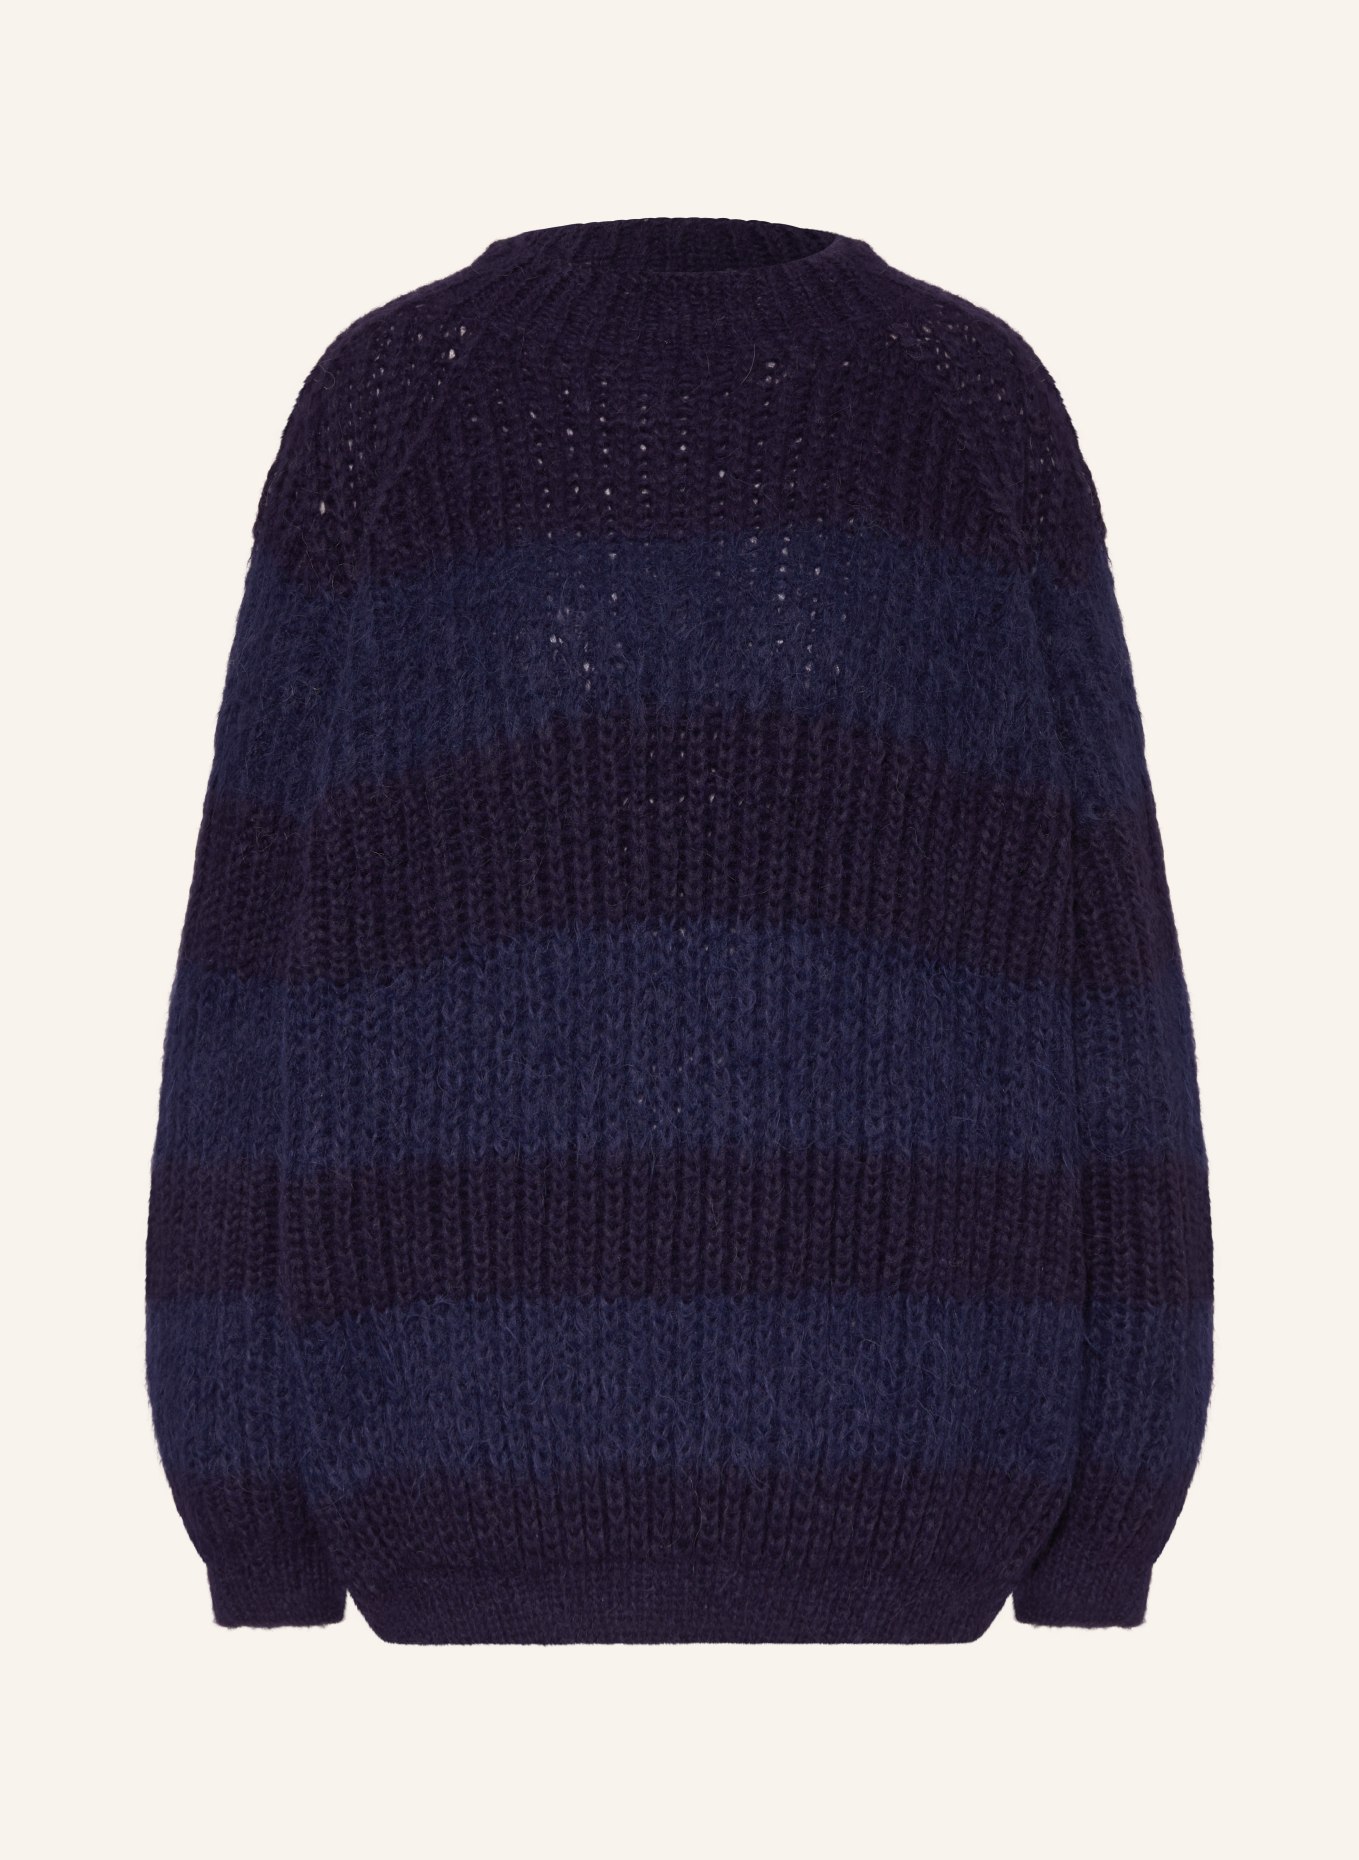 MAIAMI Pullover mit Alpaka, Farbe: DUNKELBLAU (Bild 1)